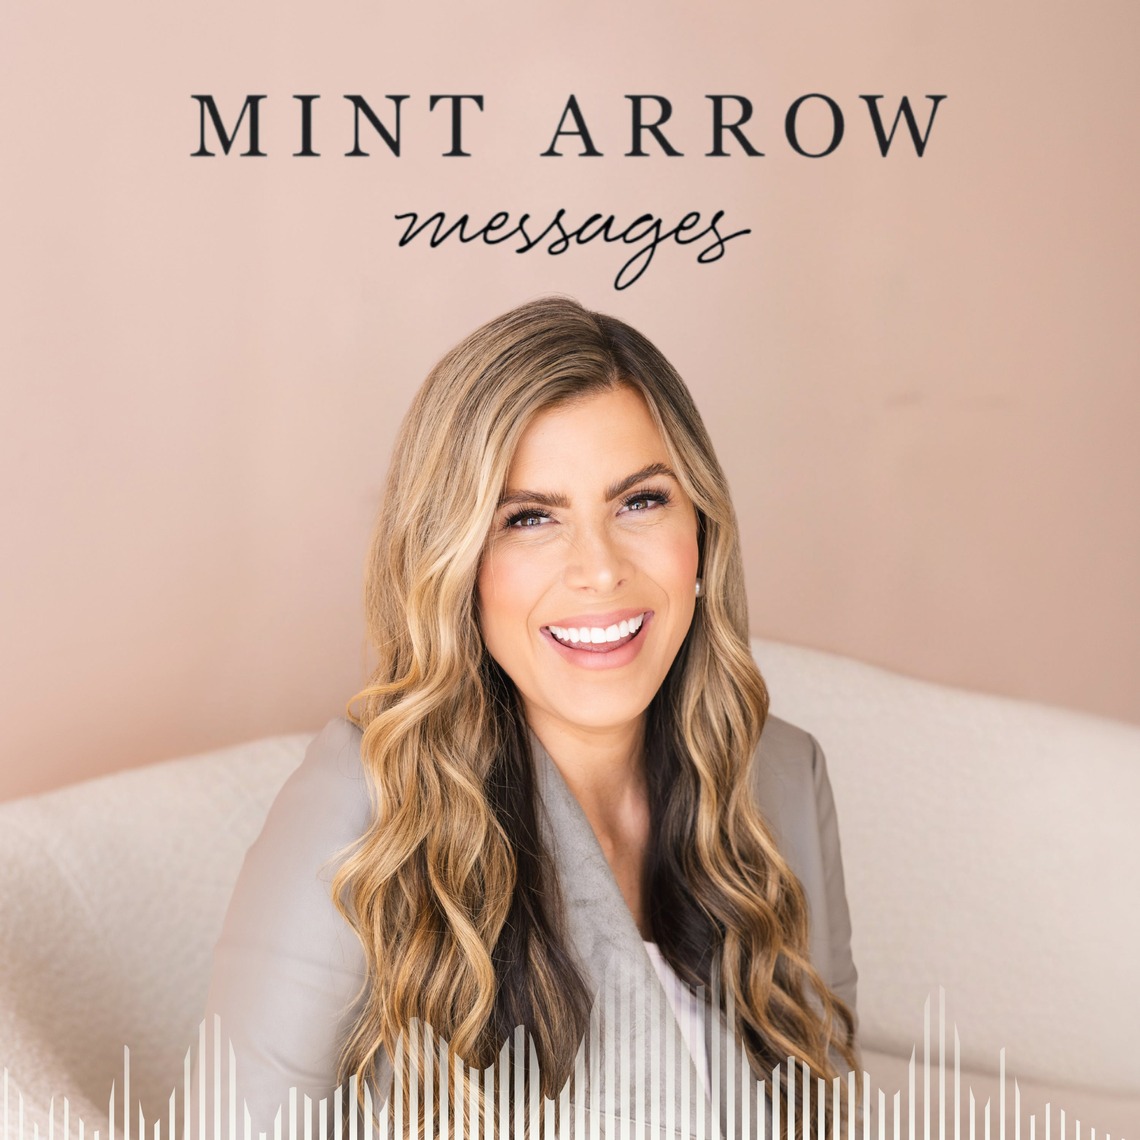 mintarrow Instagram Influencer Profile - Contact Corrine Stokoe